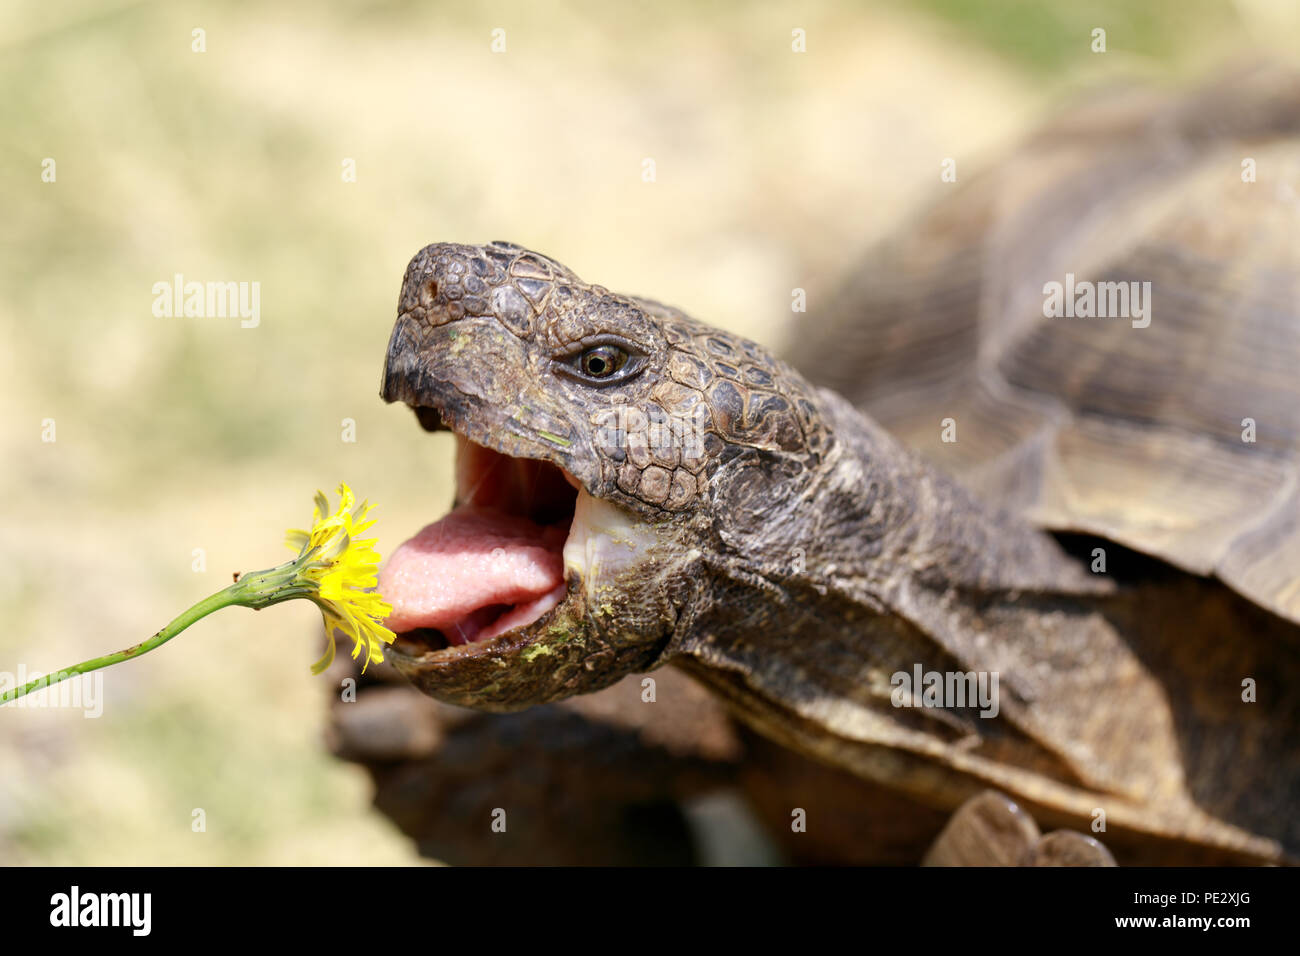 Captive maschio adulto Deserto della California tartaruga mangia tarassaco. Foto Stock